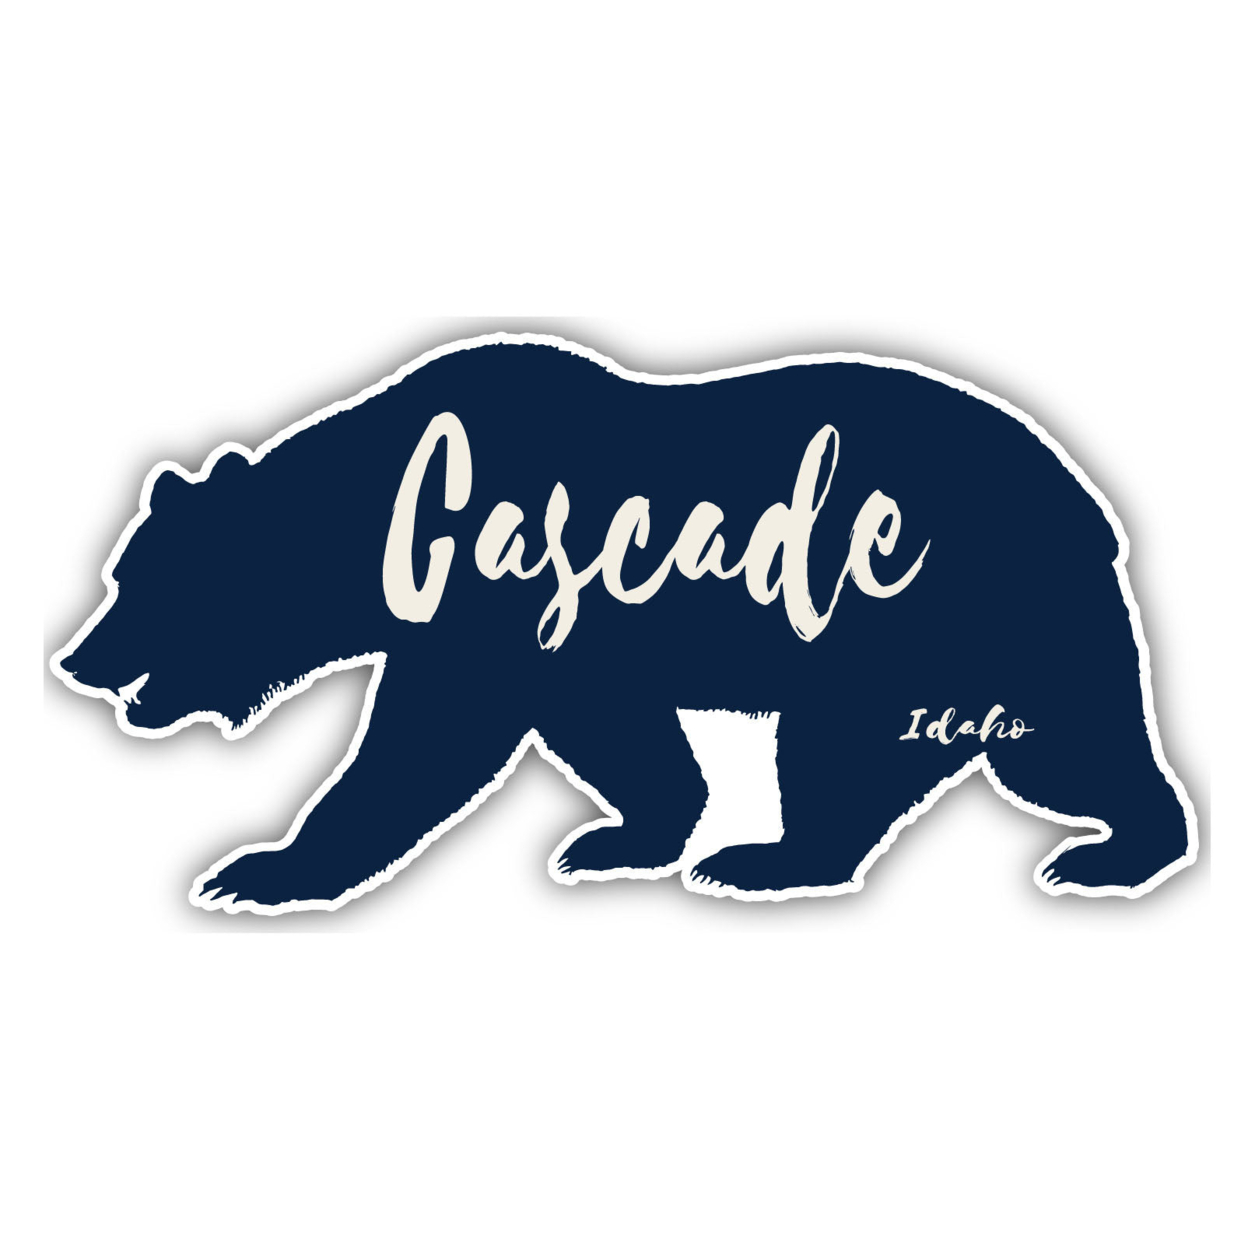 Cascade Idaho Souvenir Decorative Stickers (Choose Theme And Size) - 4-Pack, 2-Inch, Bear